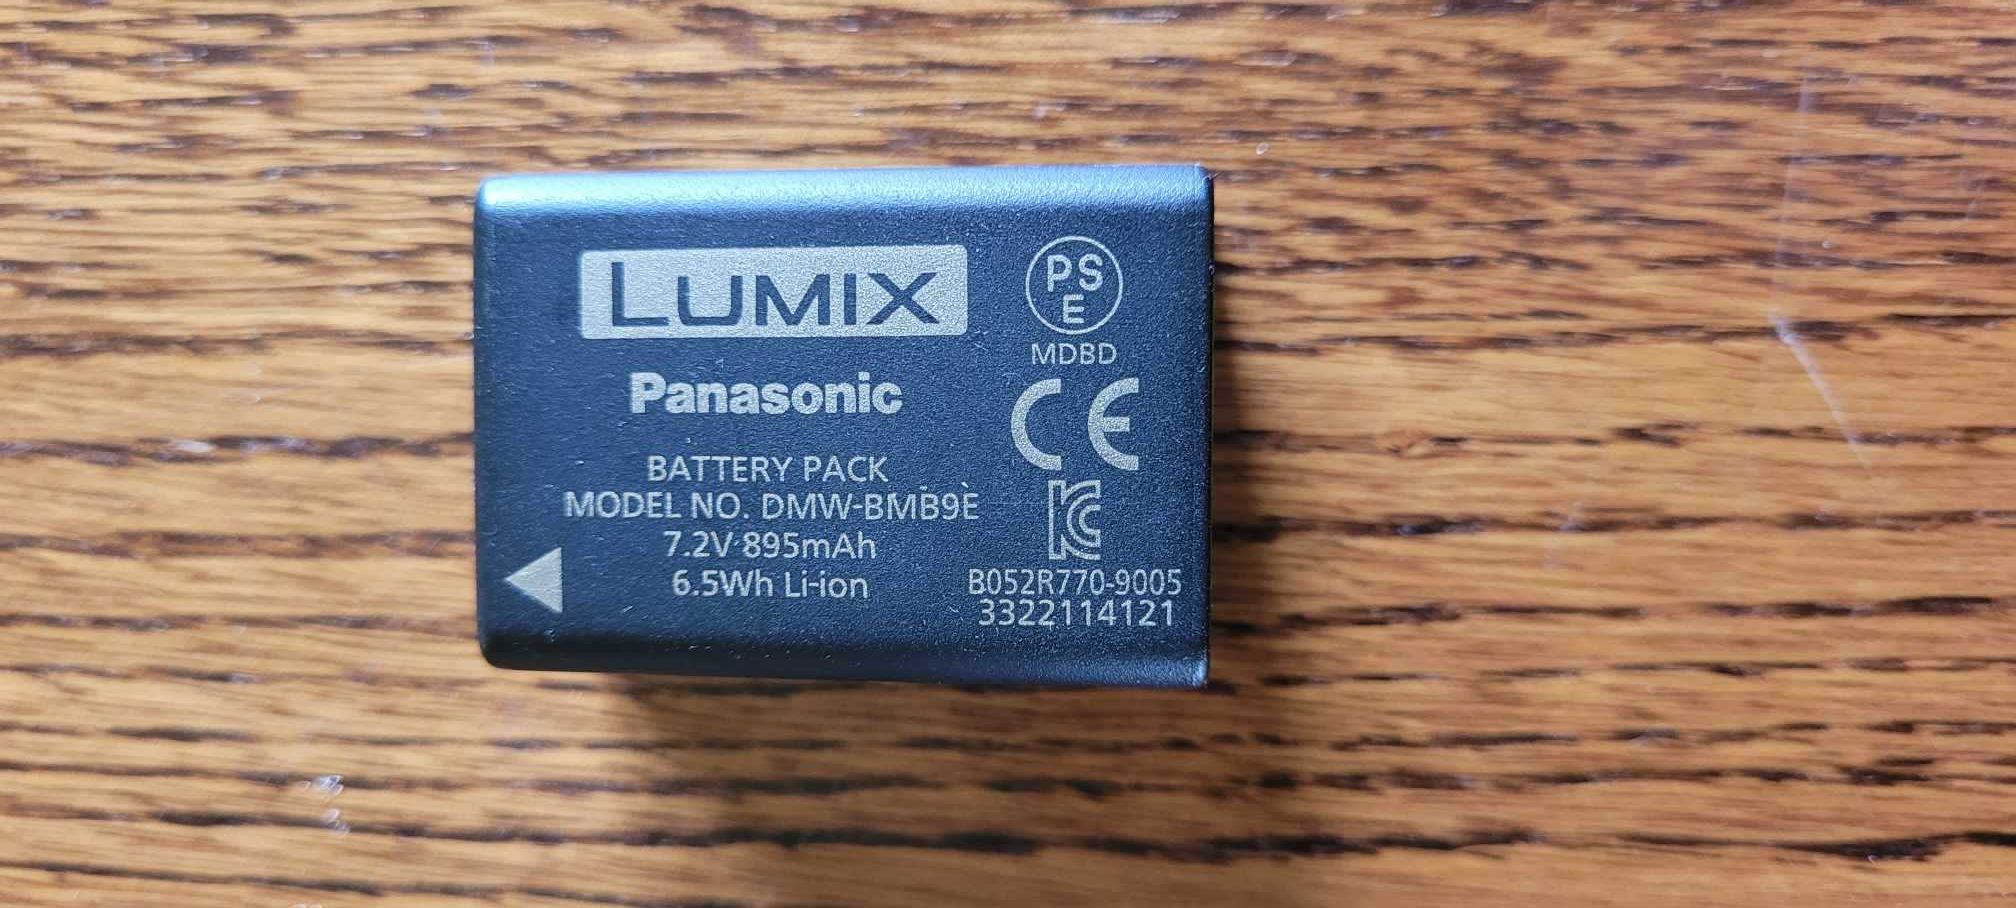 Aparat cyfrowy Panasonic DMC-FZ45, zoom 24, HD, tanio.